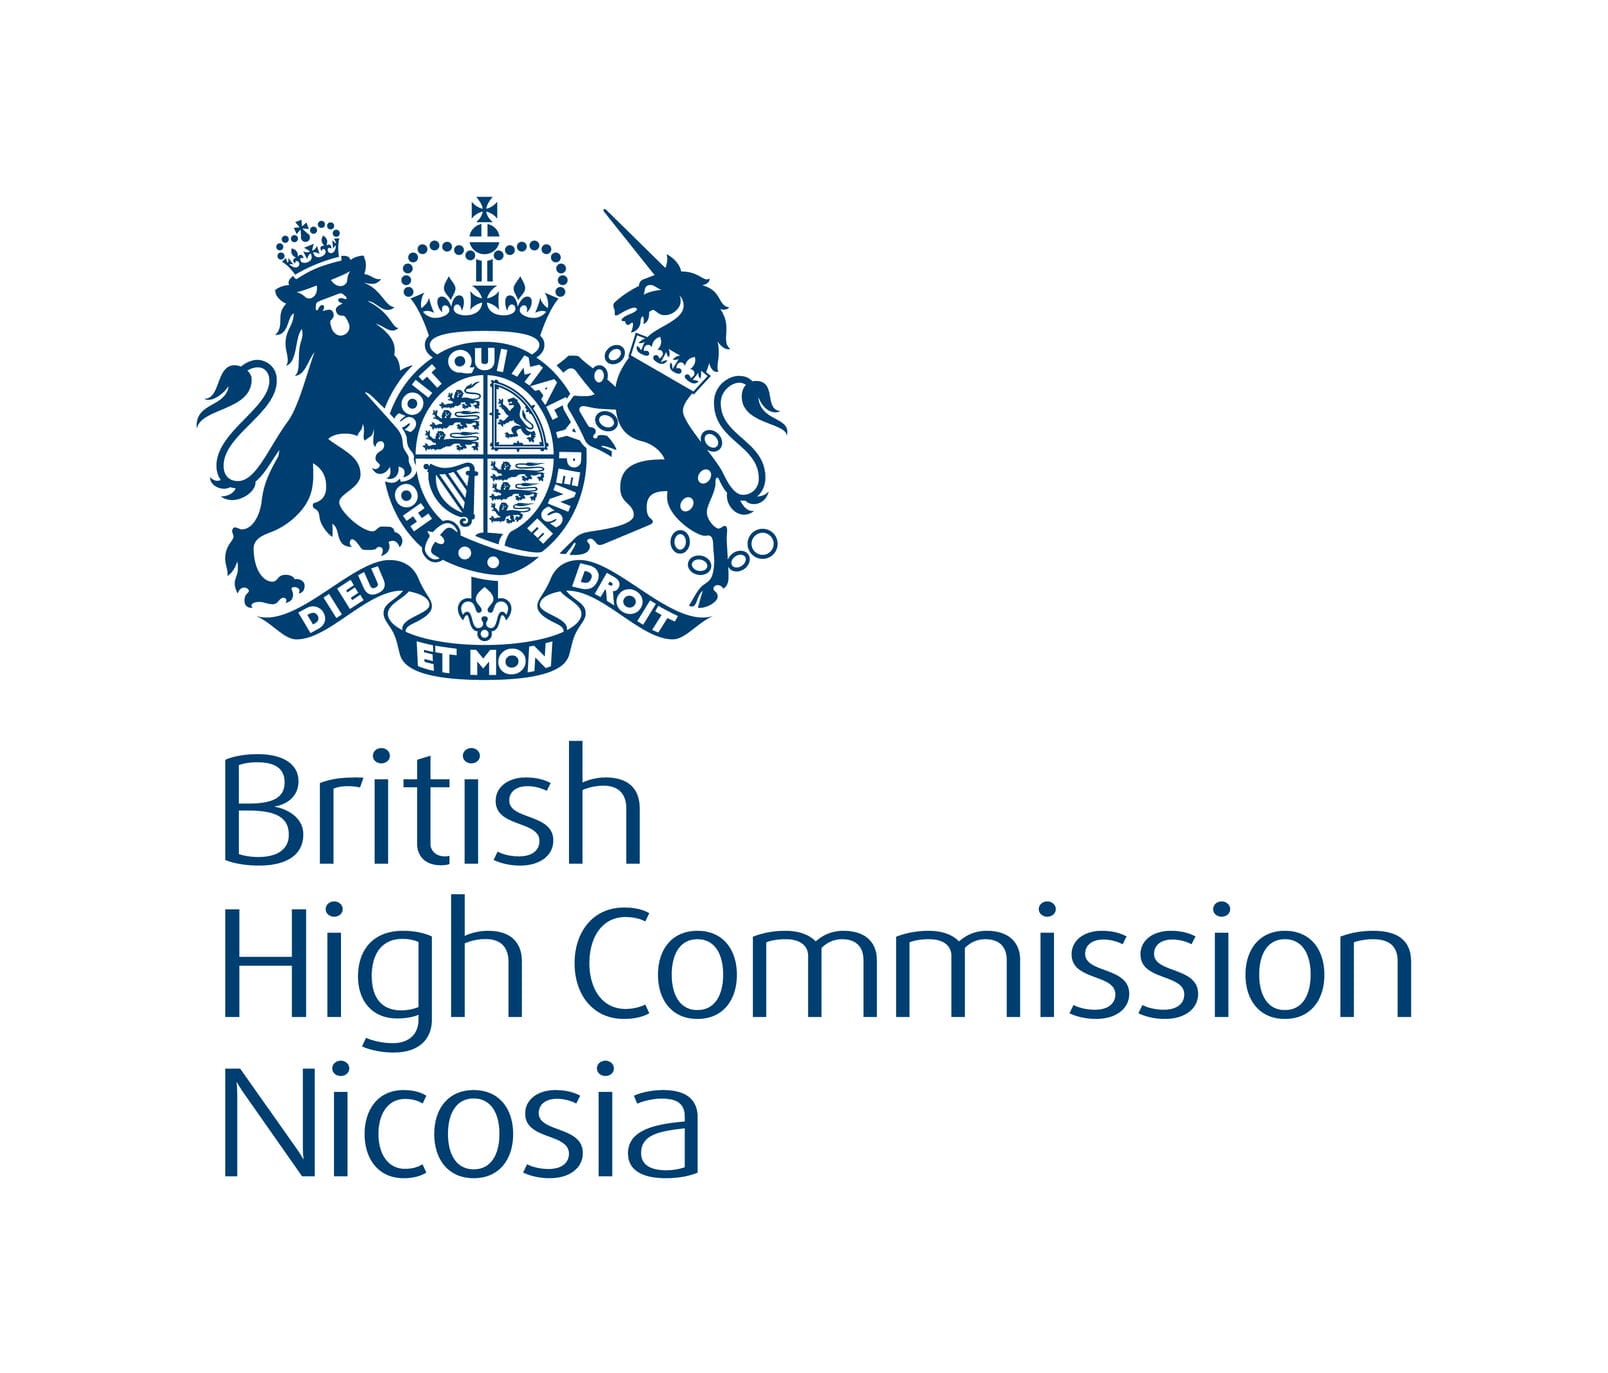 Britich High Commission